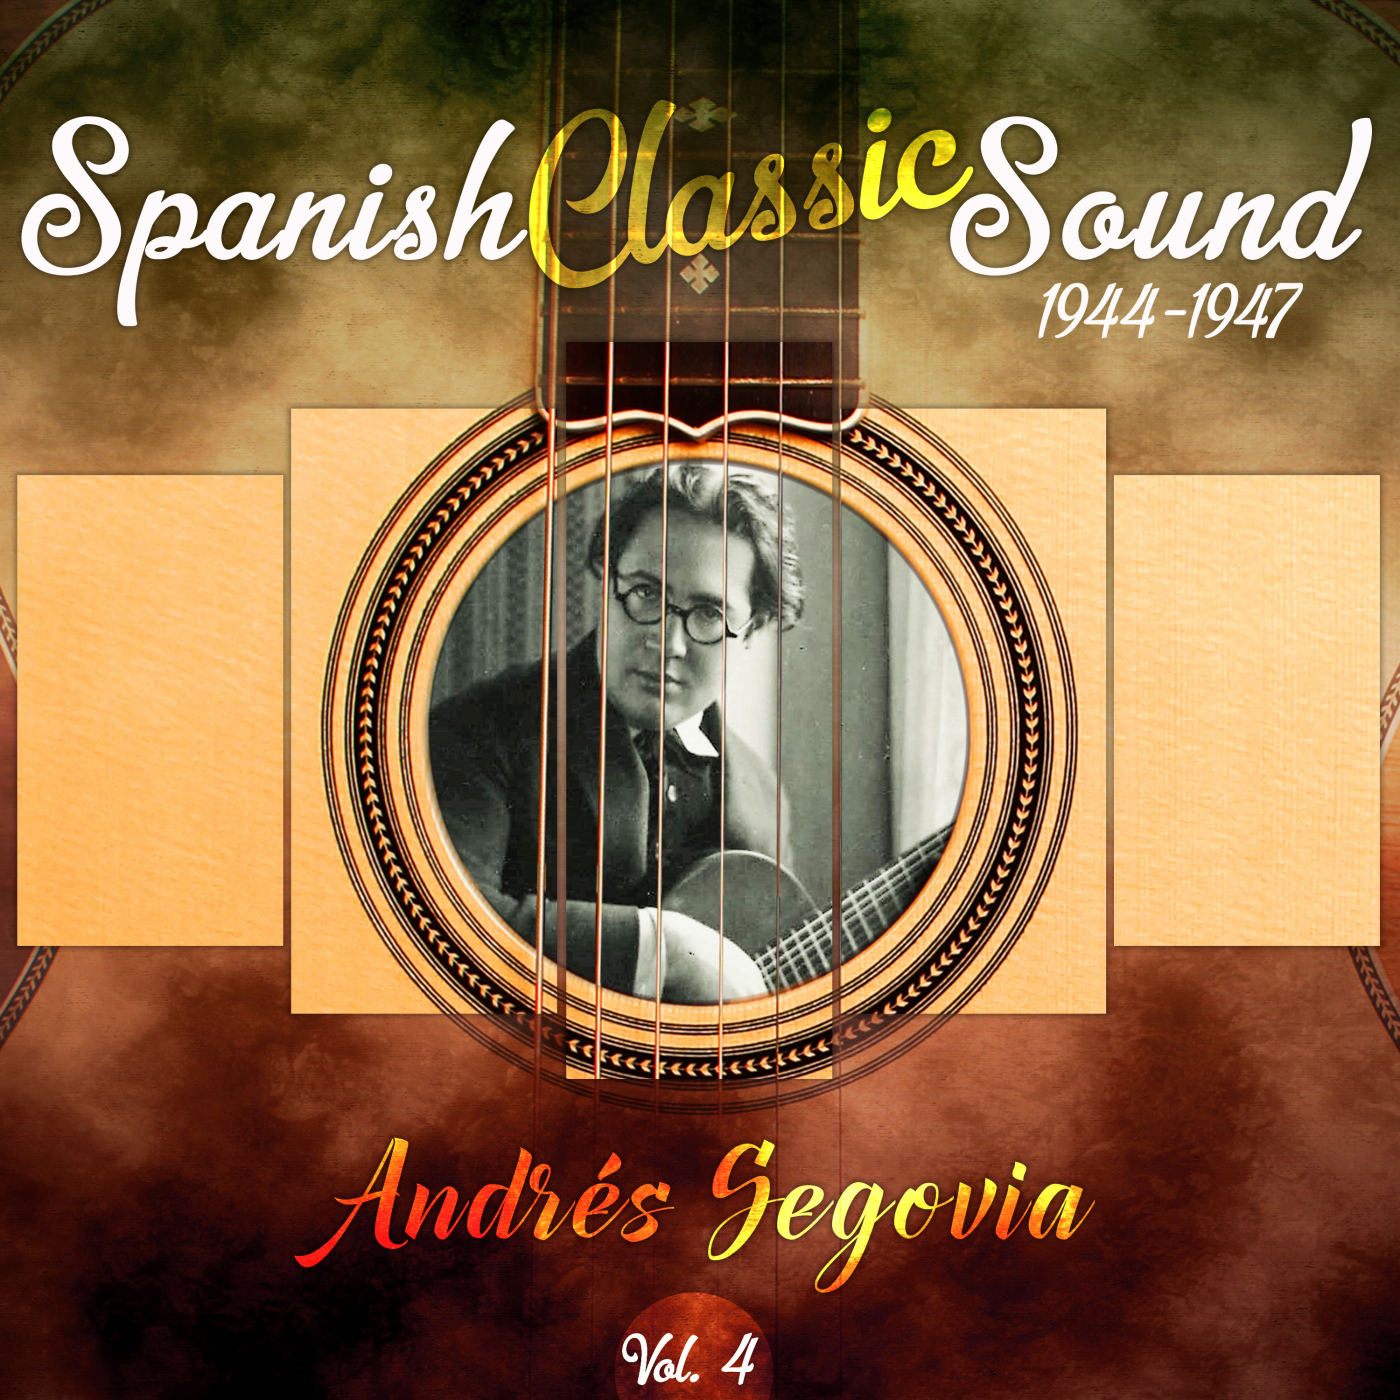 Spanish Classic Sound, Vol. 4 (1944 - 1947)